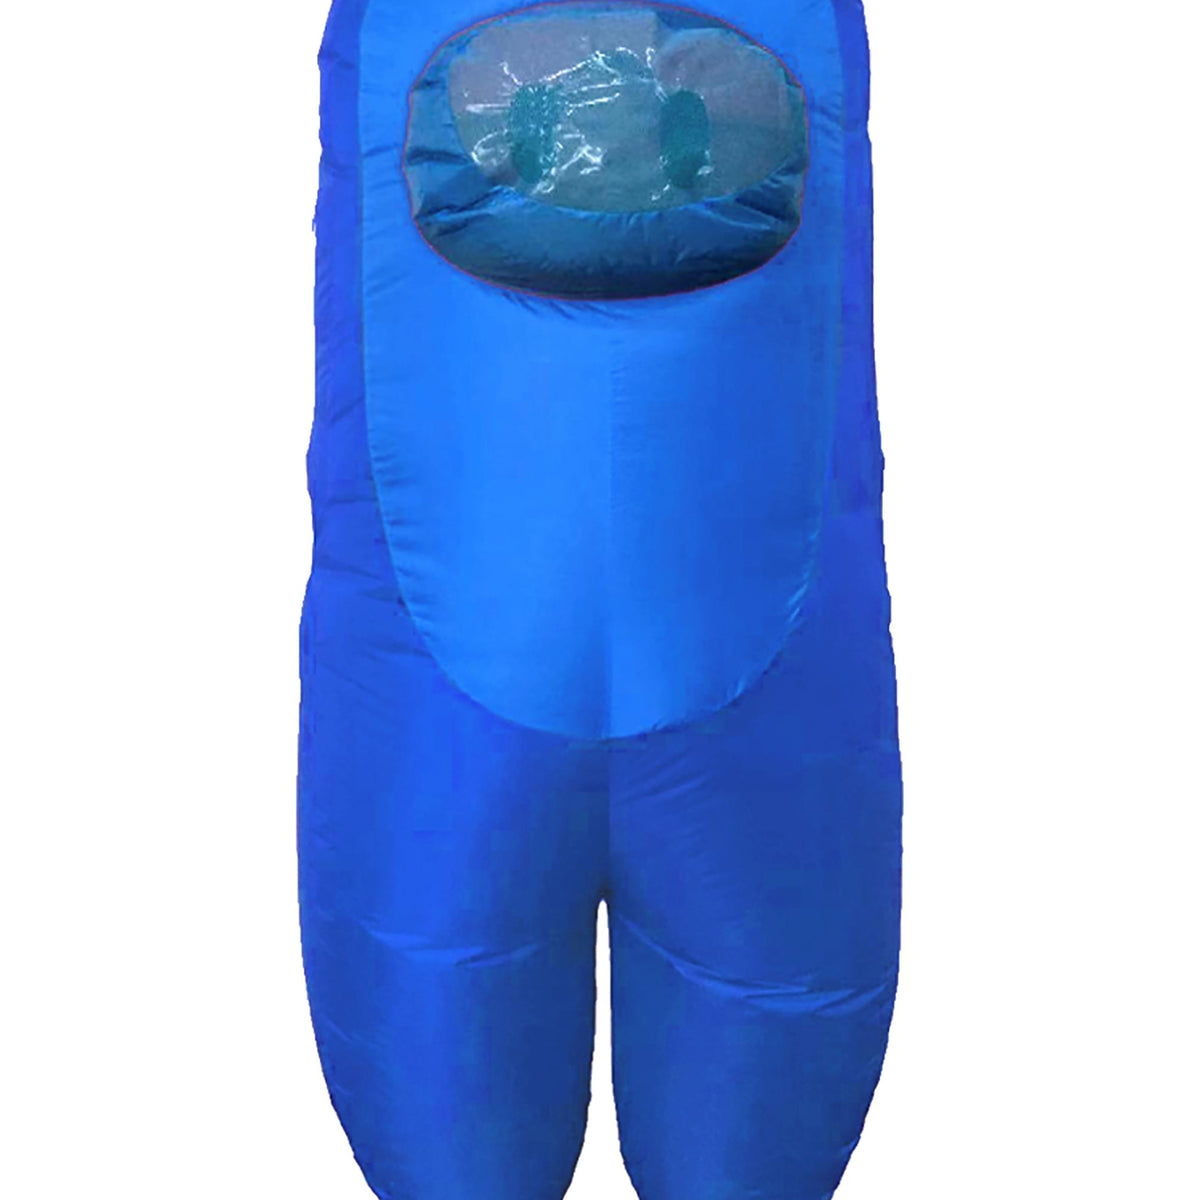 Studio Halloween Amongst Us Imposter Sus Crewmate Inflatable Adult Costume  Light Blue